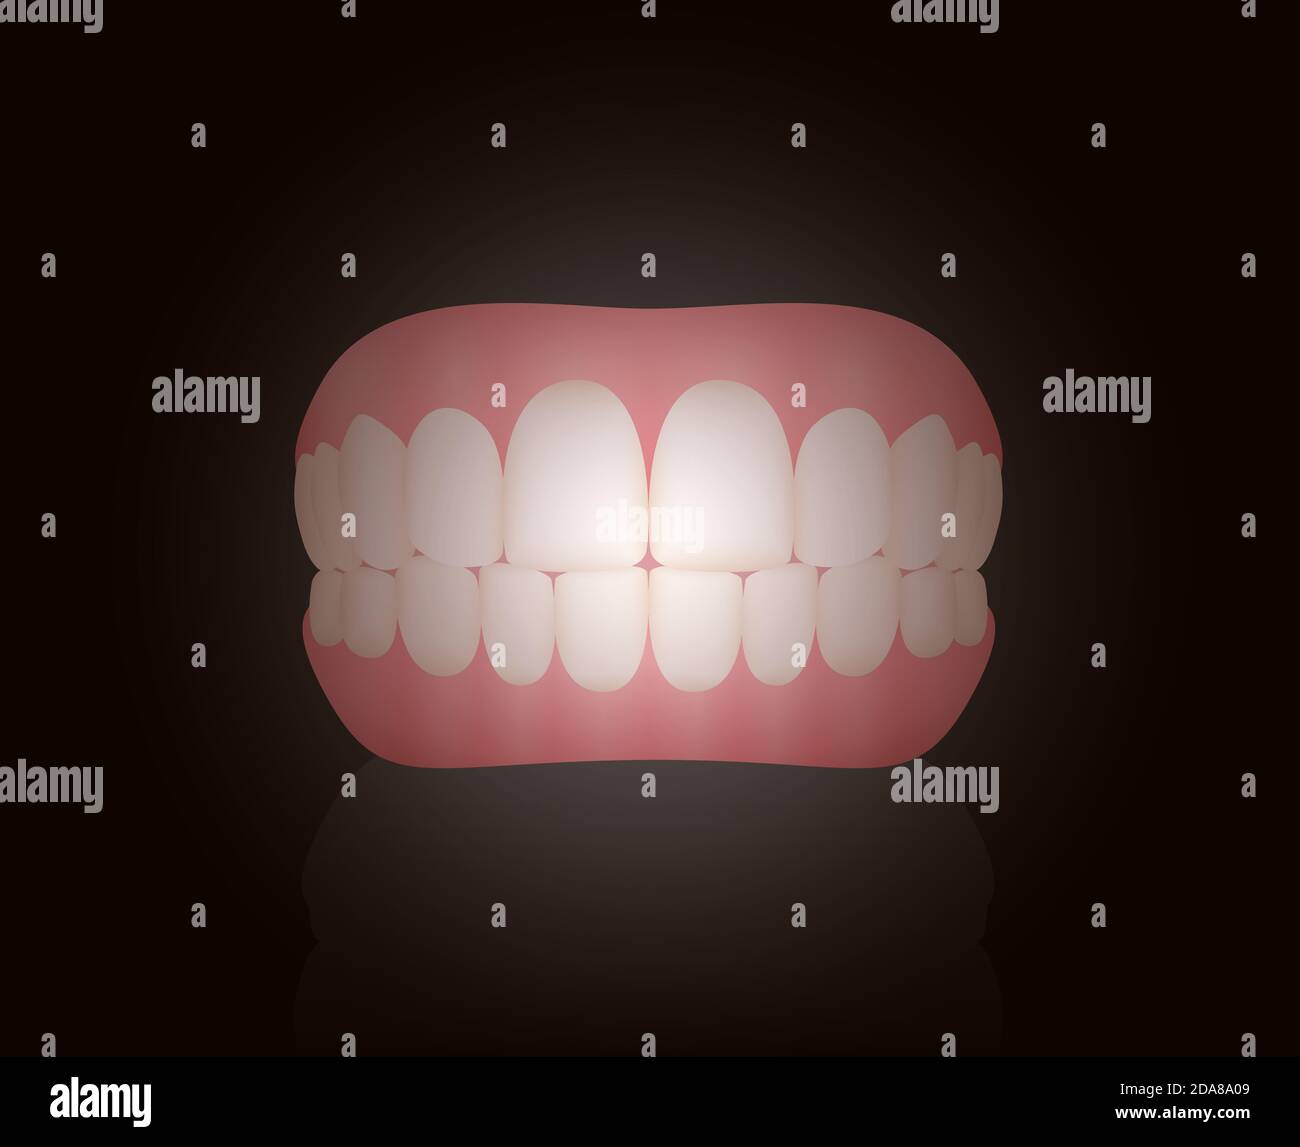 False teeth, dentures - illustration on black background. Stock Photo